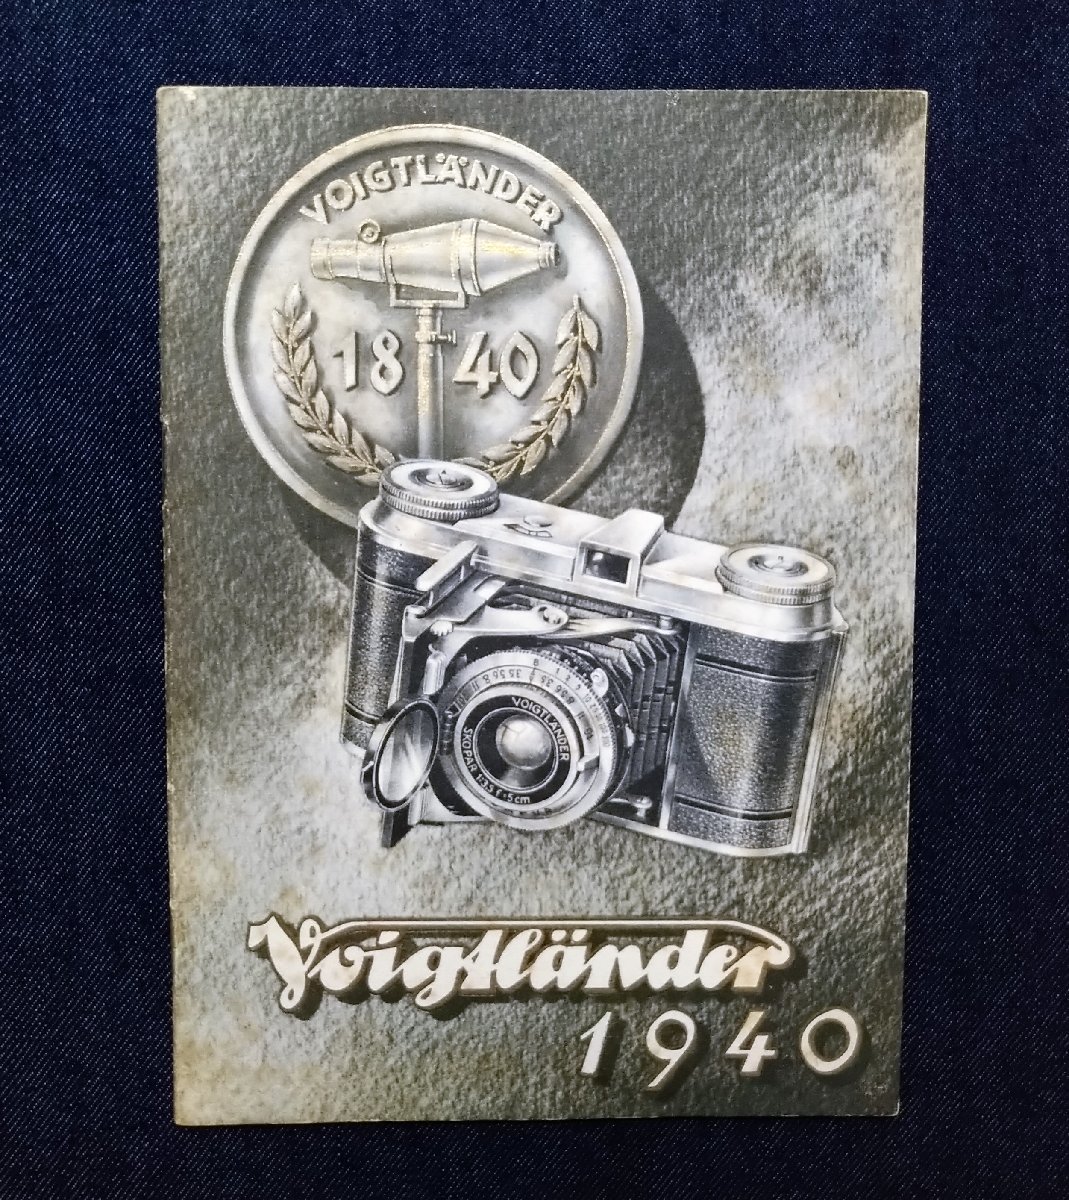 1940 year fok trenda -Voigtlander 1940 rare Vintage * camera / lens 